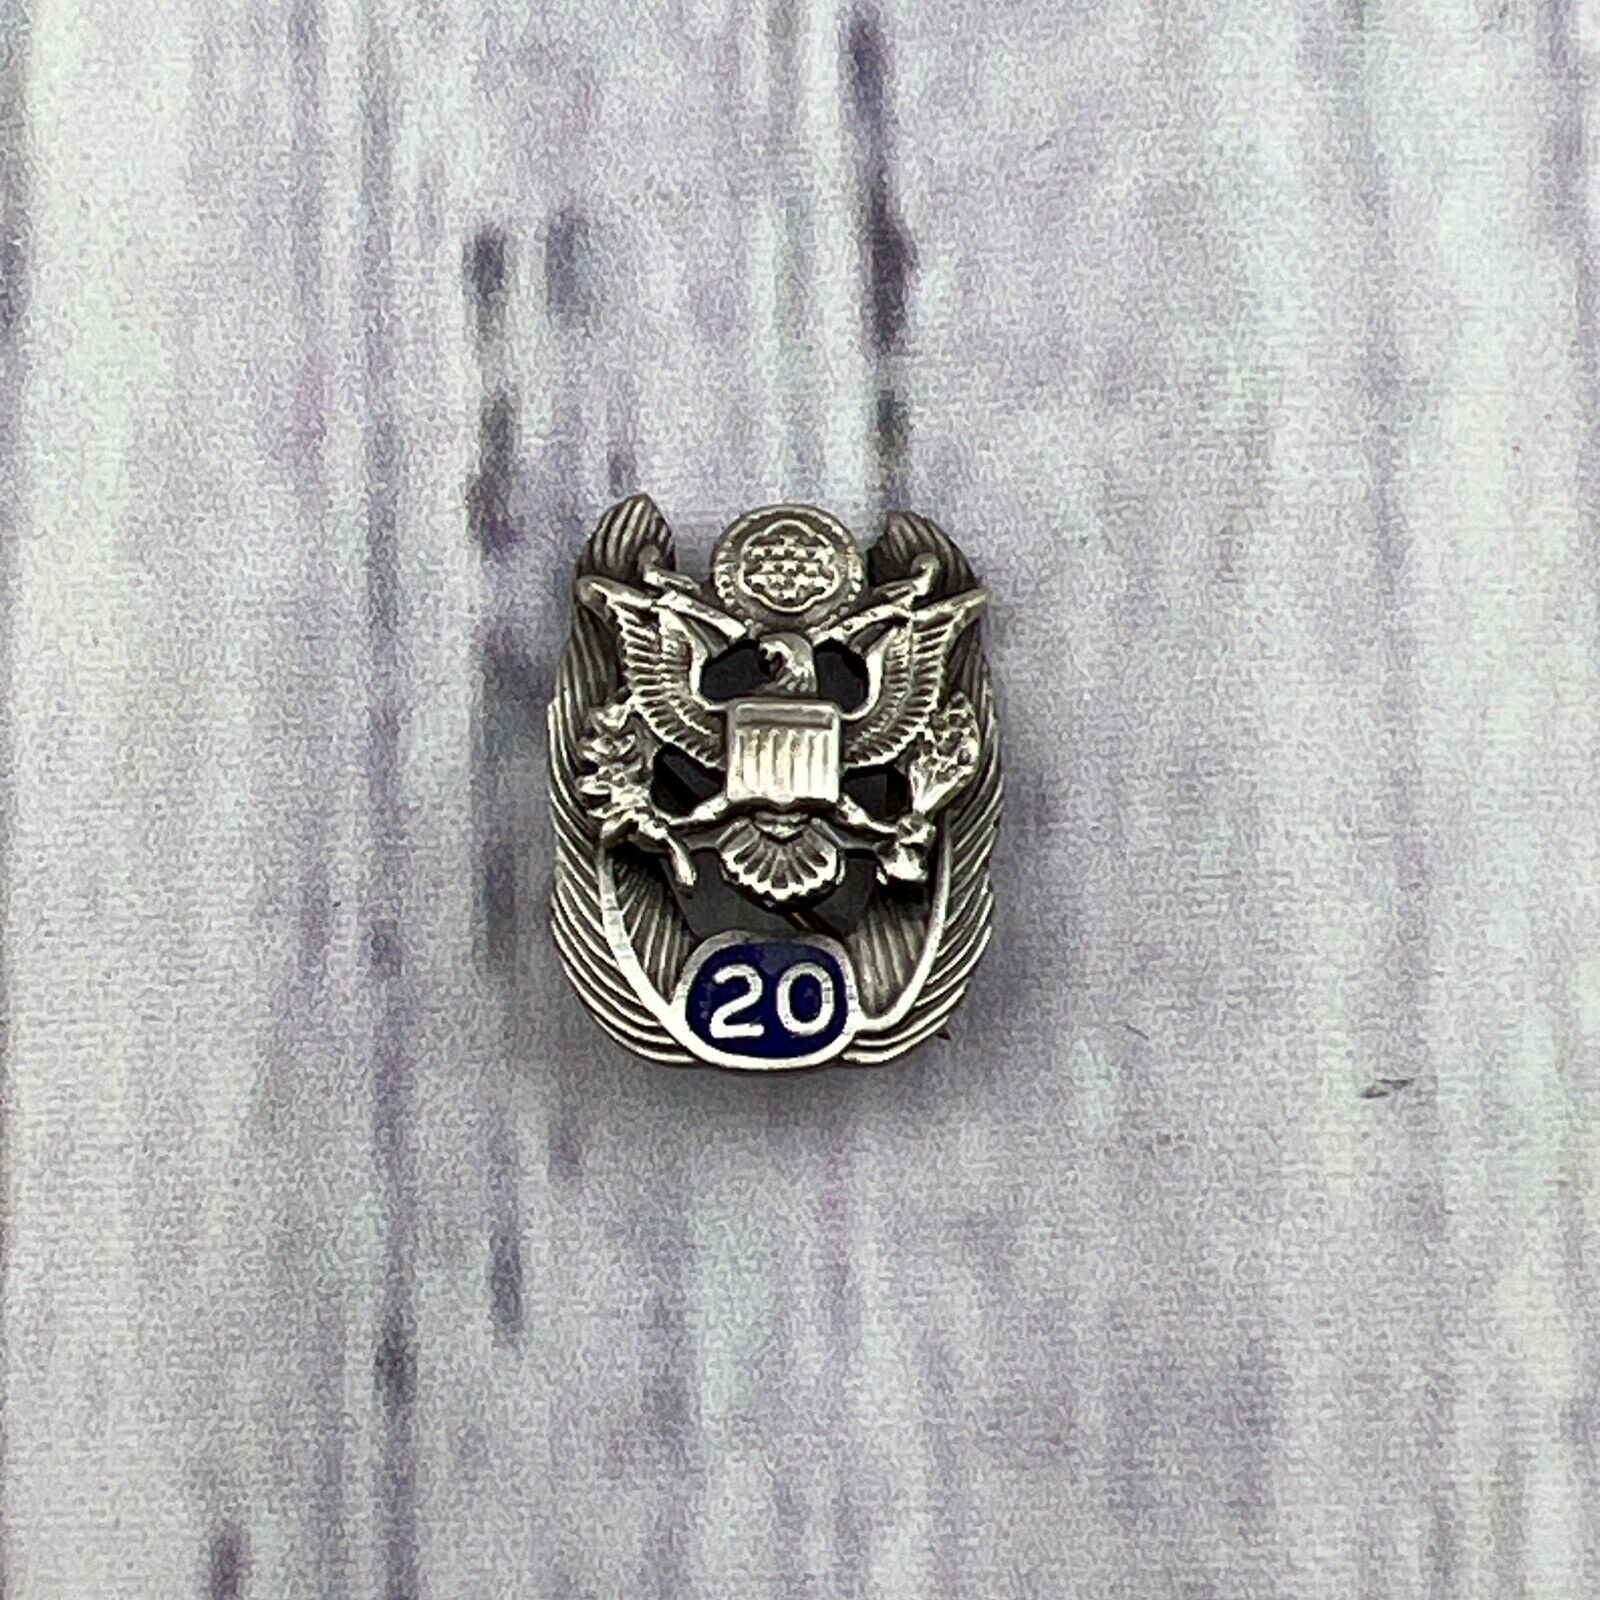 Vintage Pin BSA Boy Scouts 20 Year Pin, Tie Tack